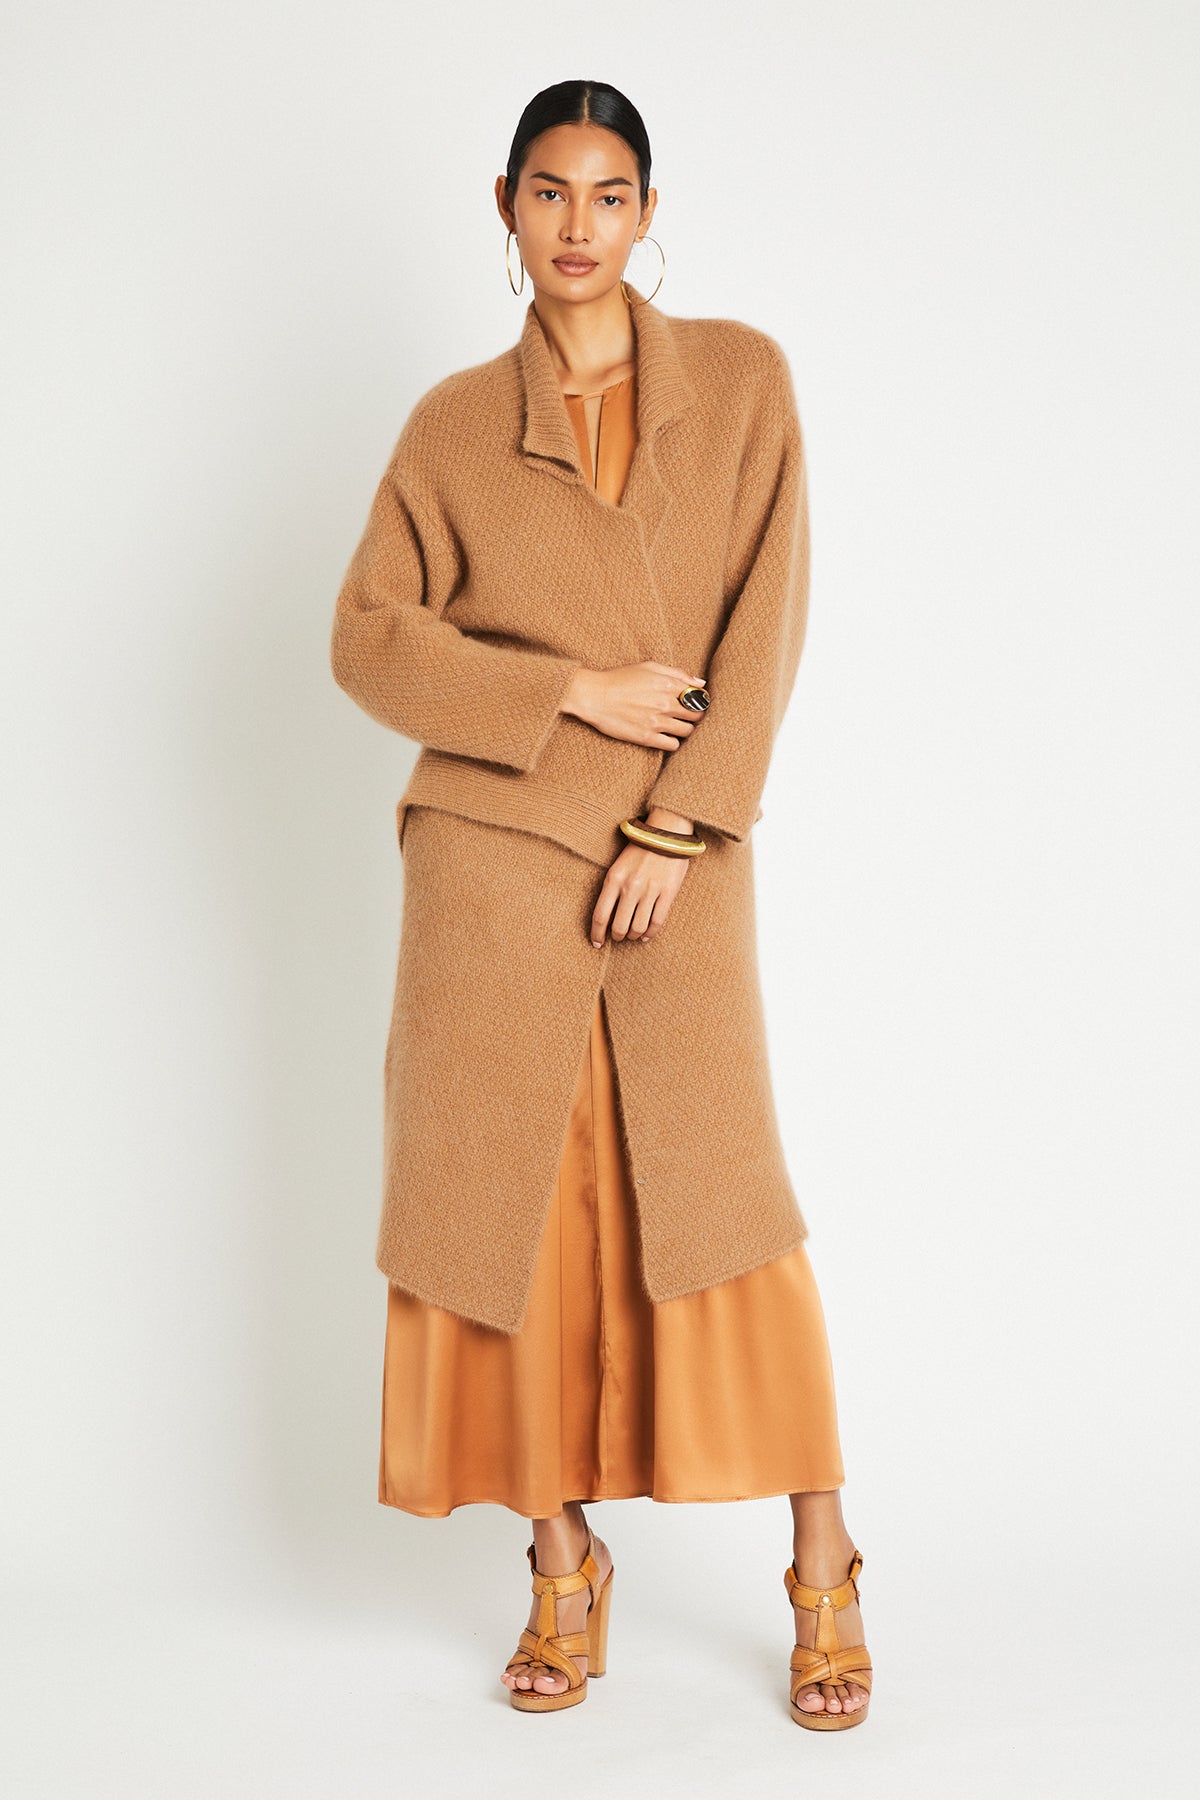 + Beryll Marianne Cashmere Coat | Camel - +Beryll Marianne Coat | Camel - +Beryll Worn By Good People